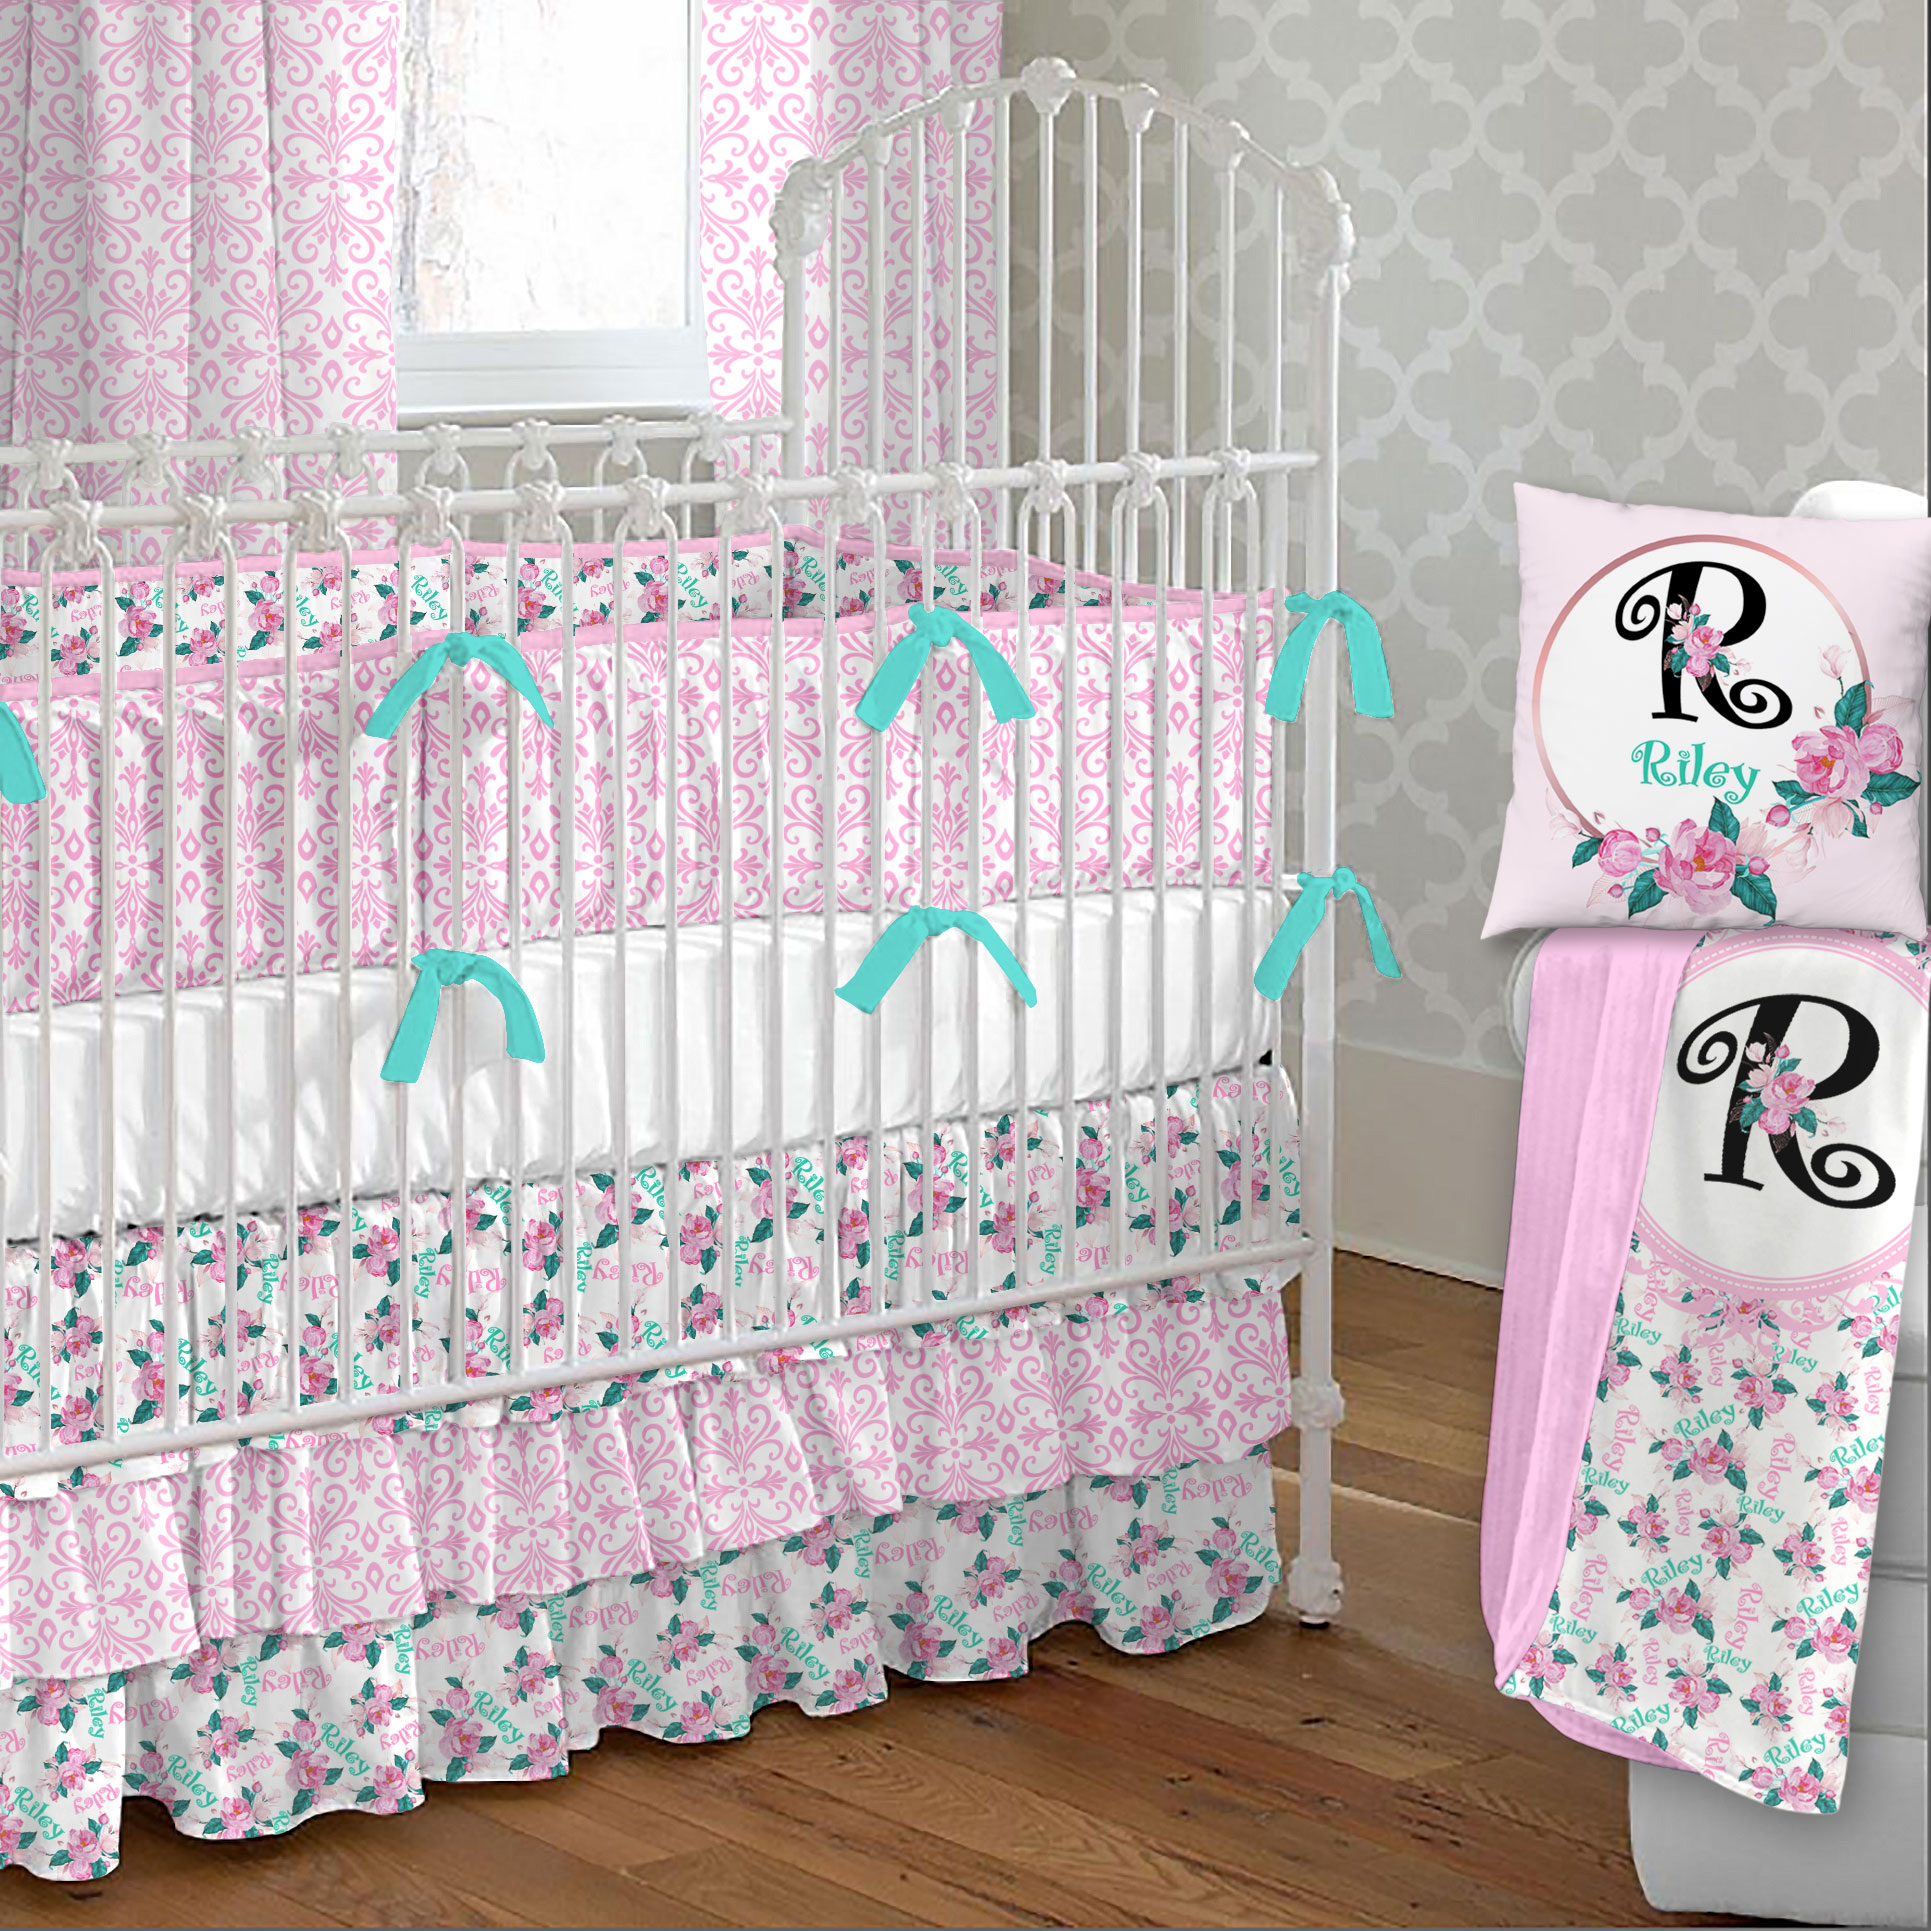 personalized crib bedding sets